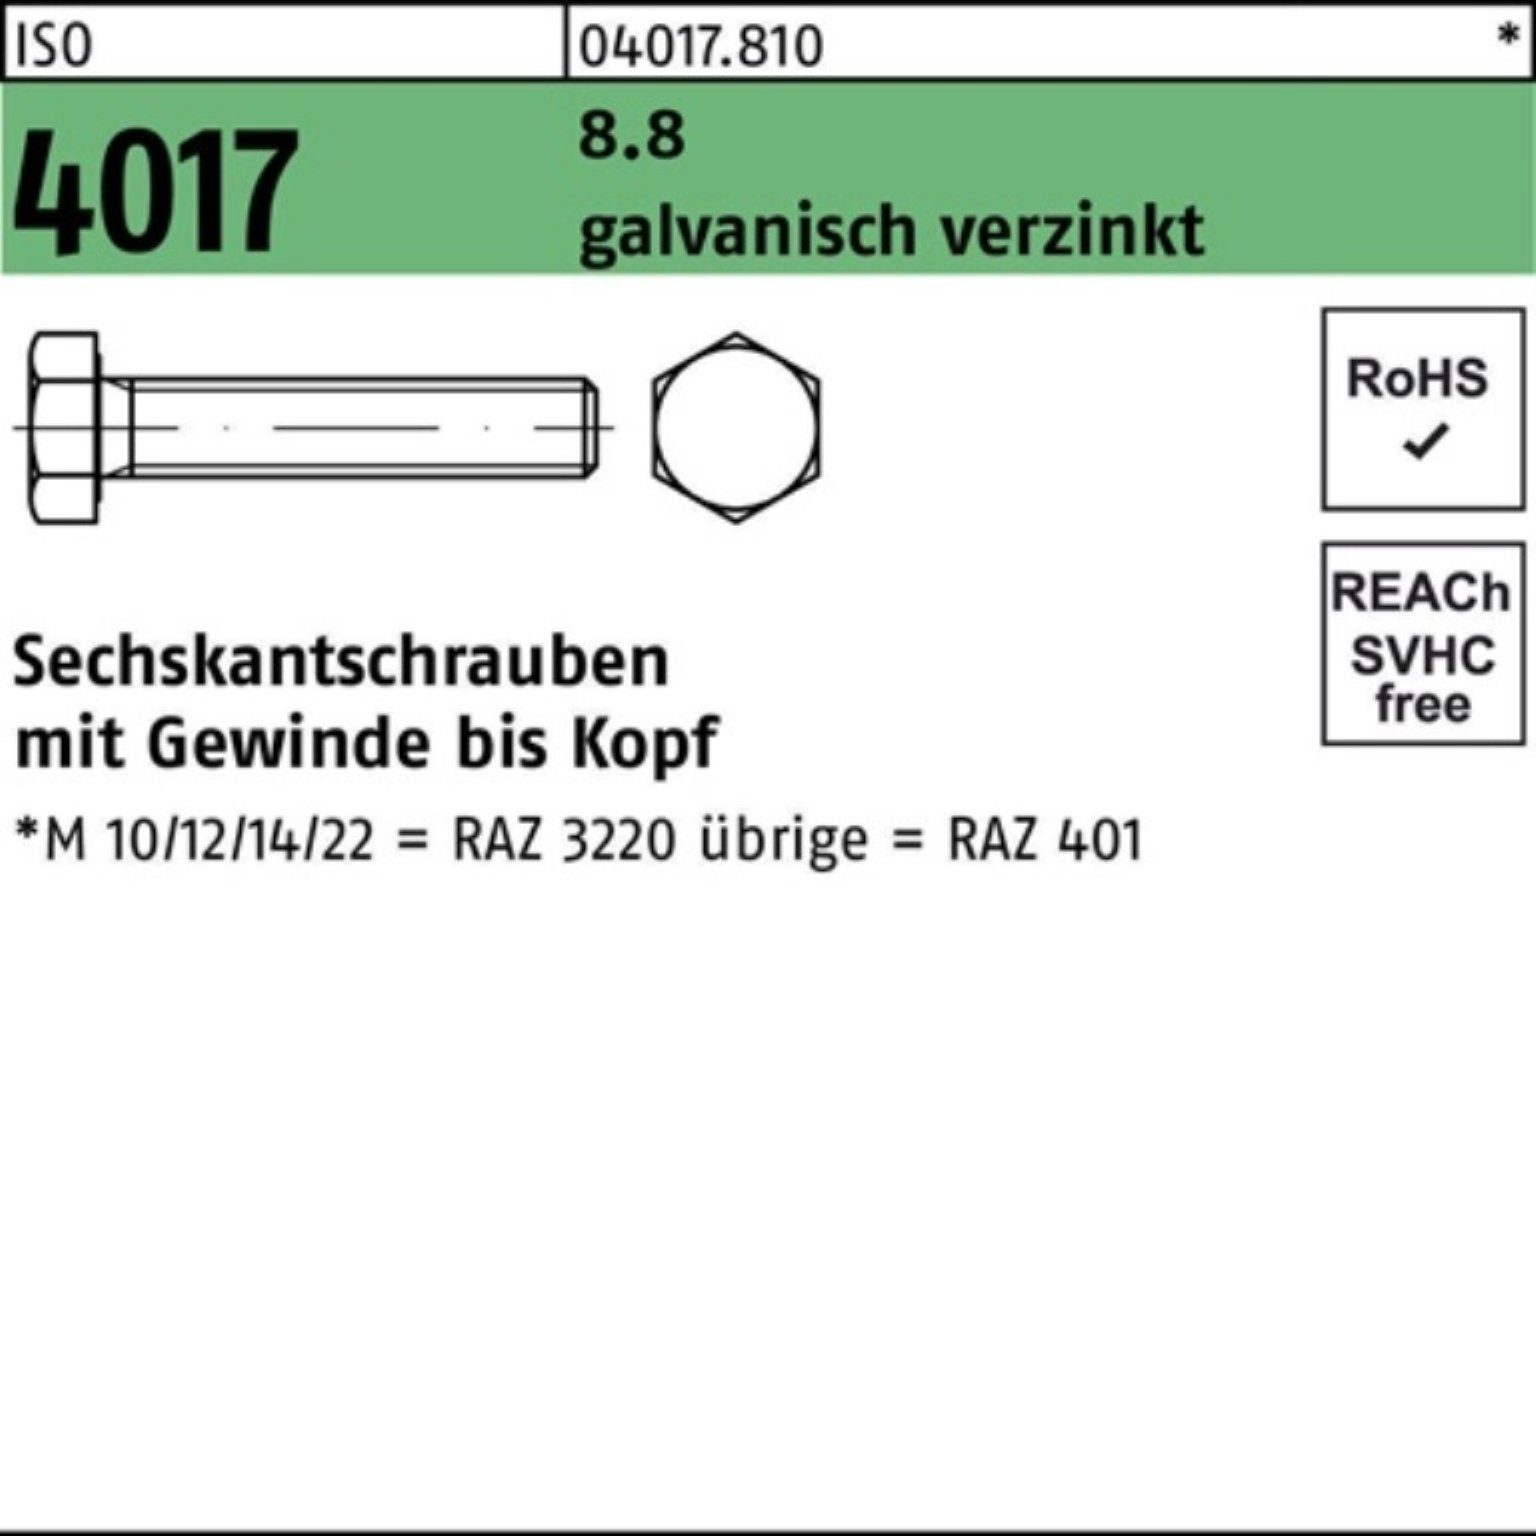 Bufab Sechskantschraube 100er Pack Sechskantschraube 100 8.8 M6x 25 ISO 4017 VG galv.verz. St